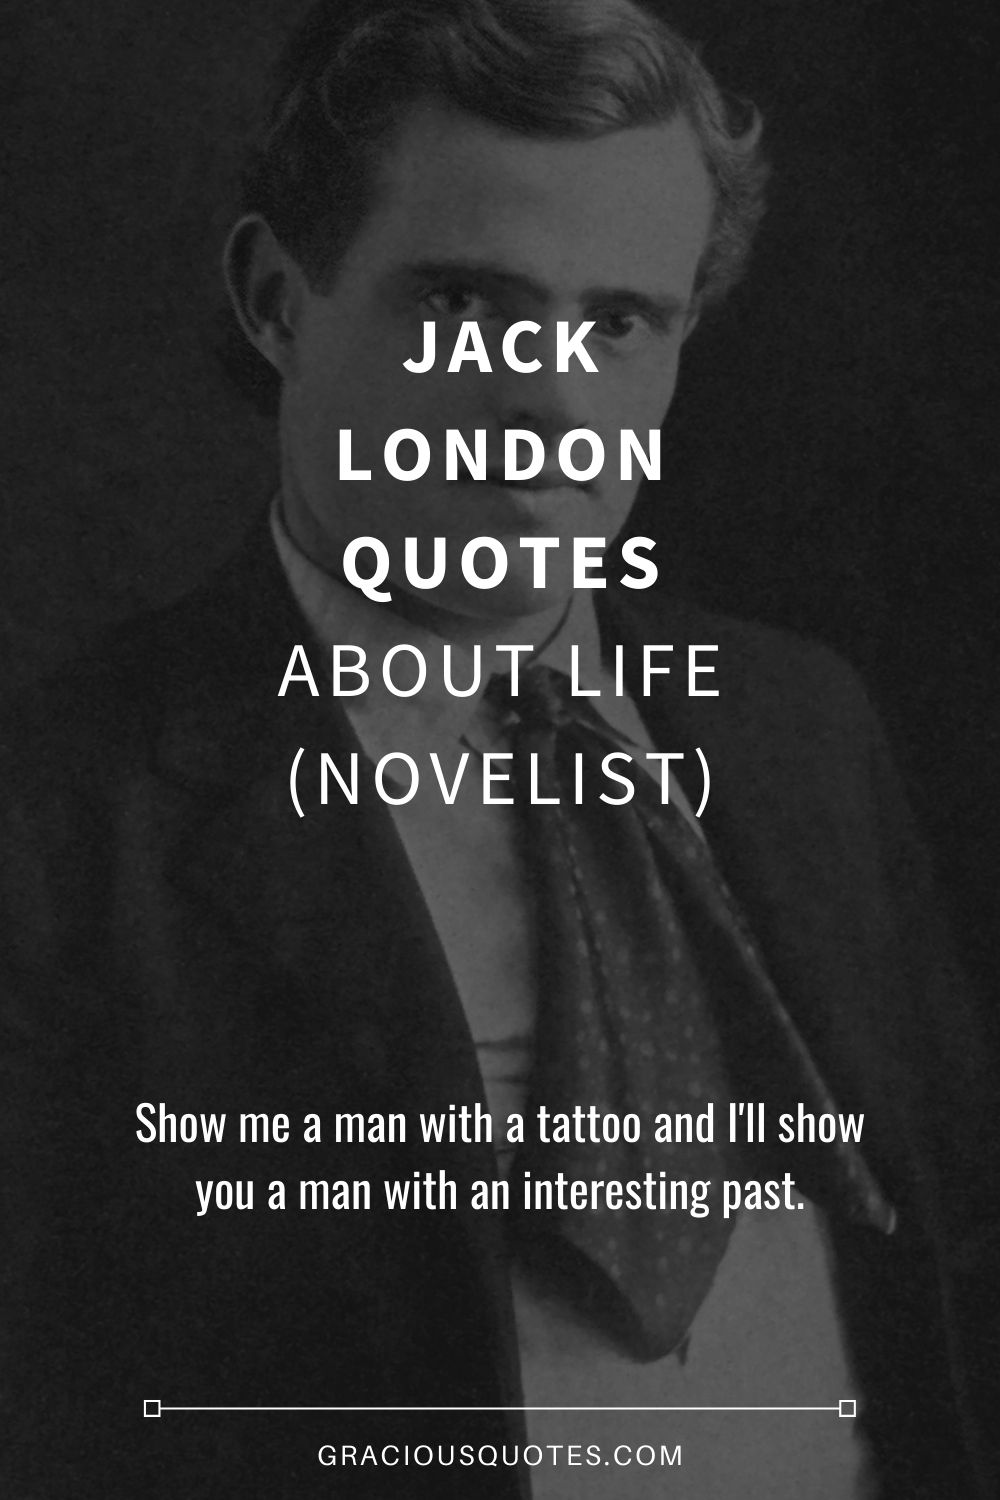 Jack London Quotes About Life (NOVELIST) - Gracious Quotes